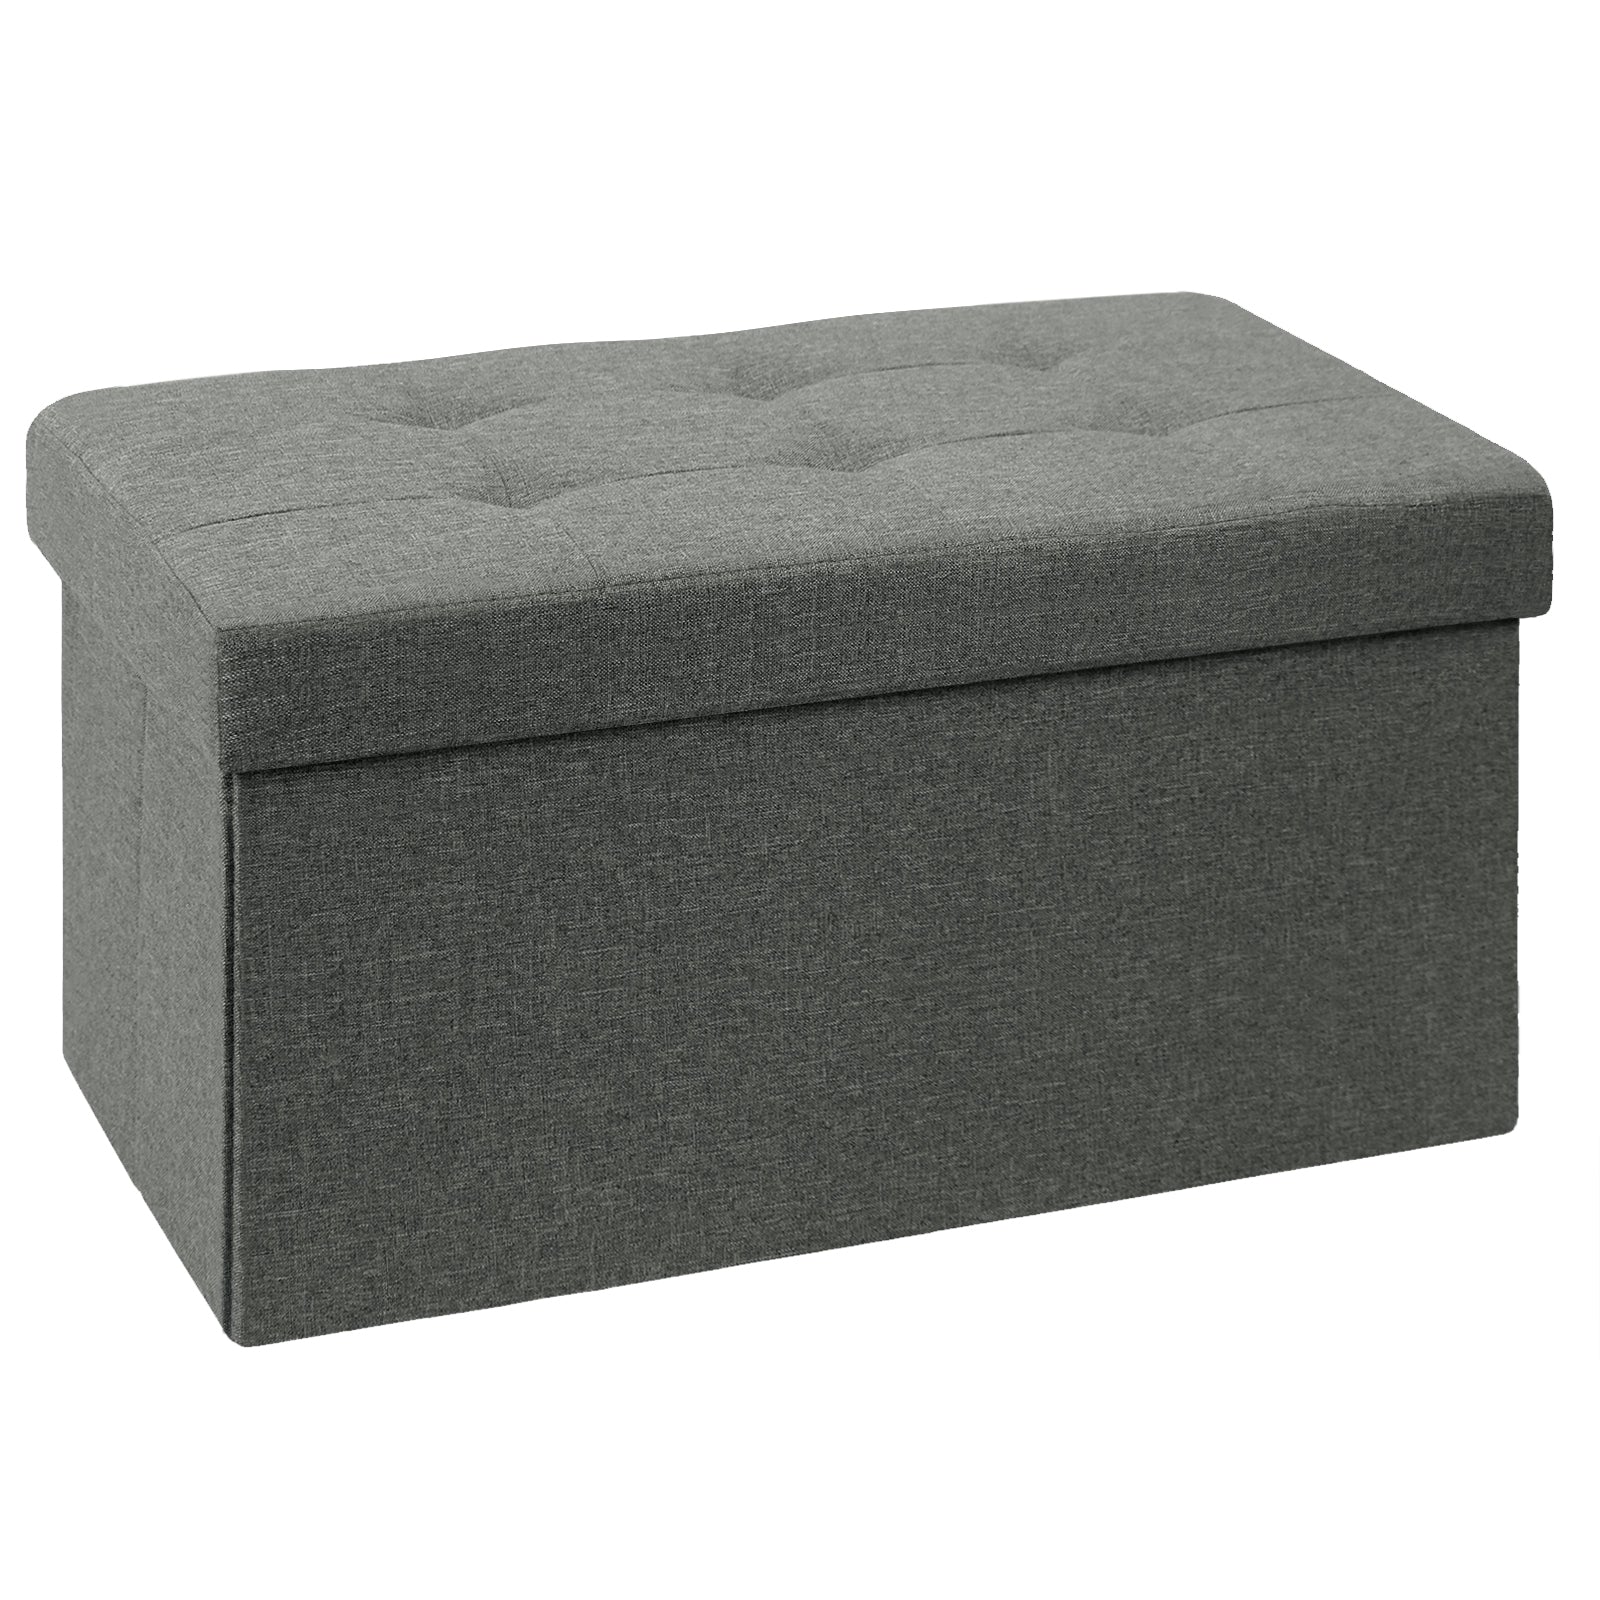 BRIAN & DANY Folding Linen Storage Boxes Footstool Ottoman, Dark Grey